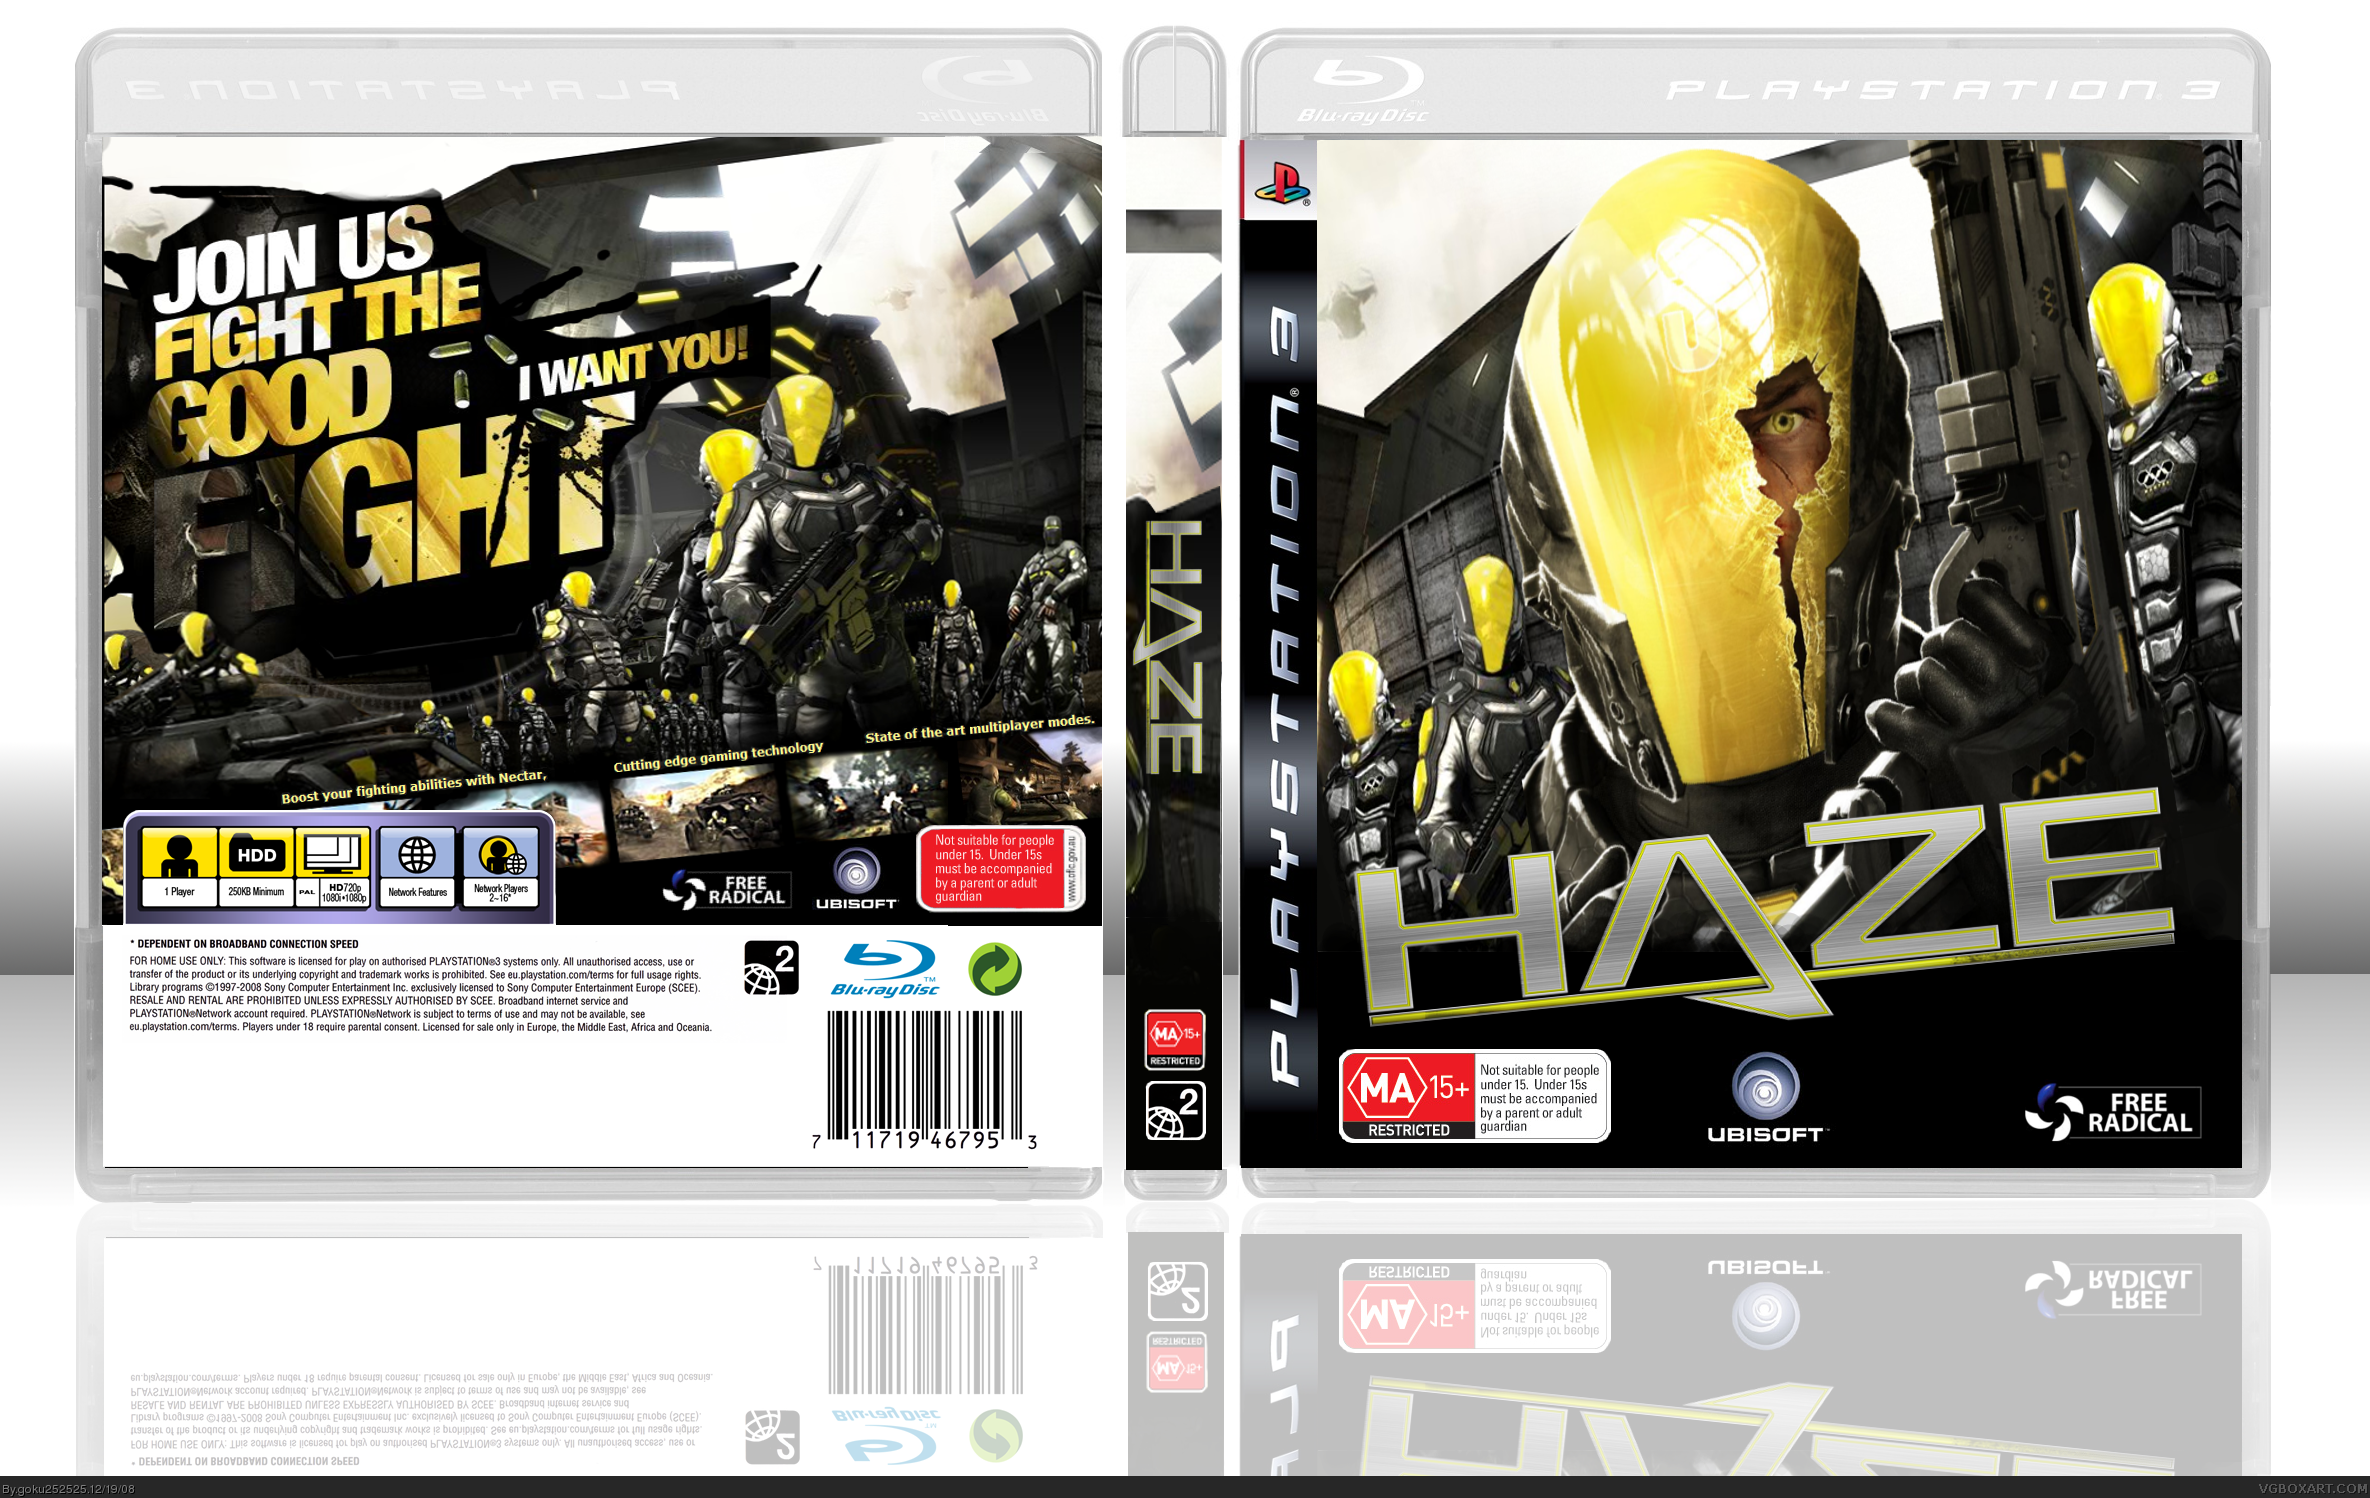 HAZE box cover